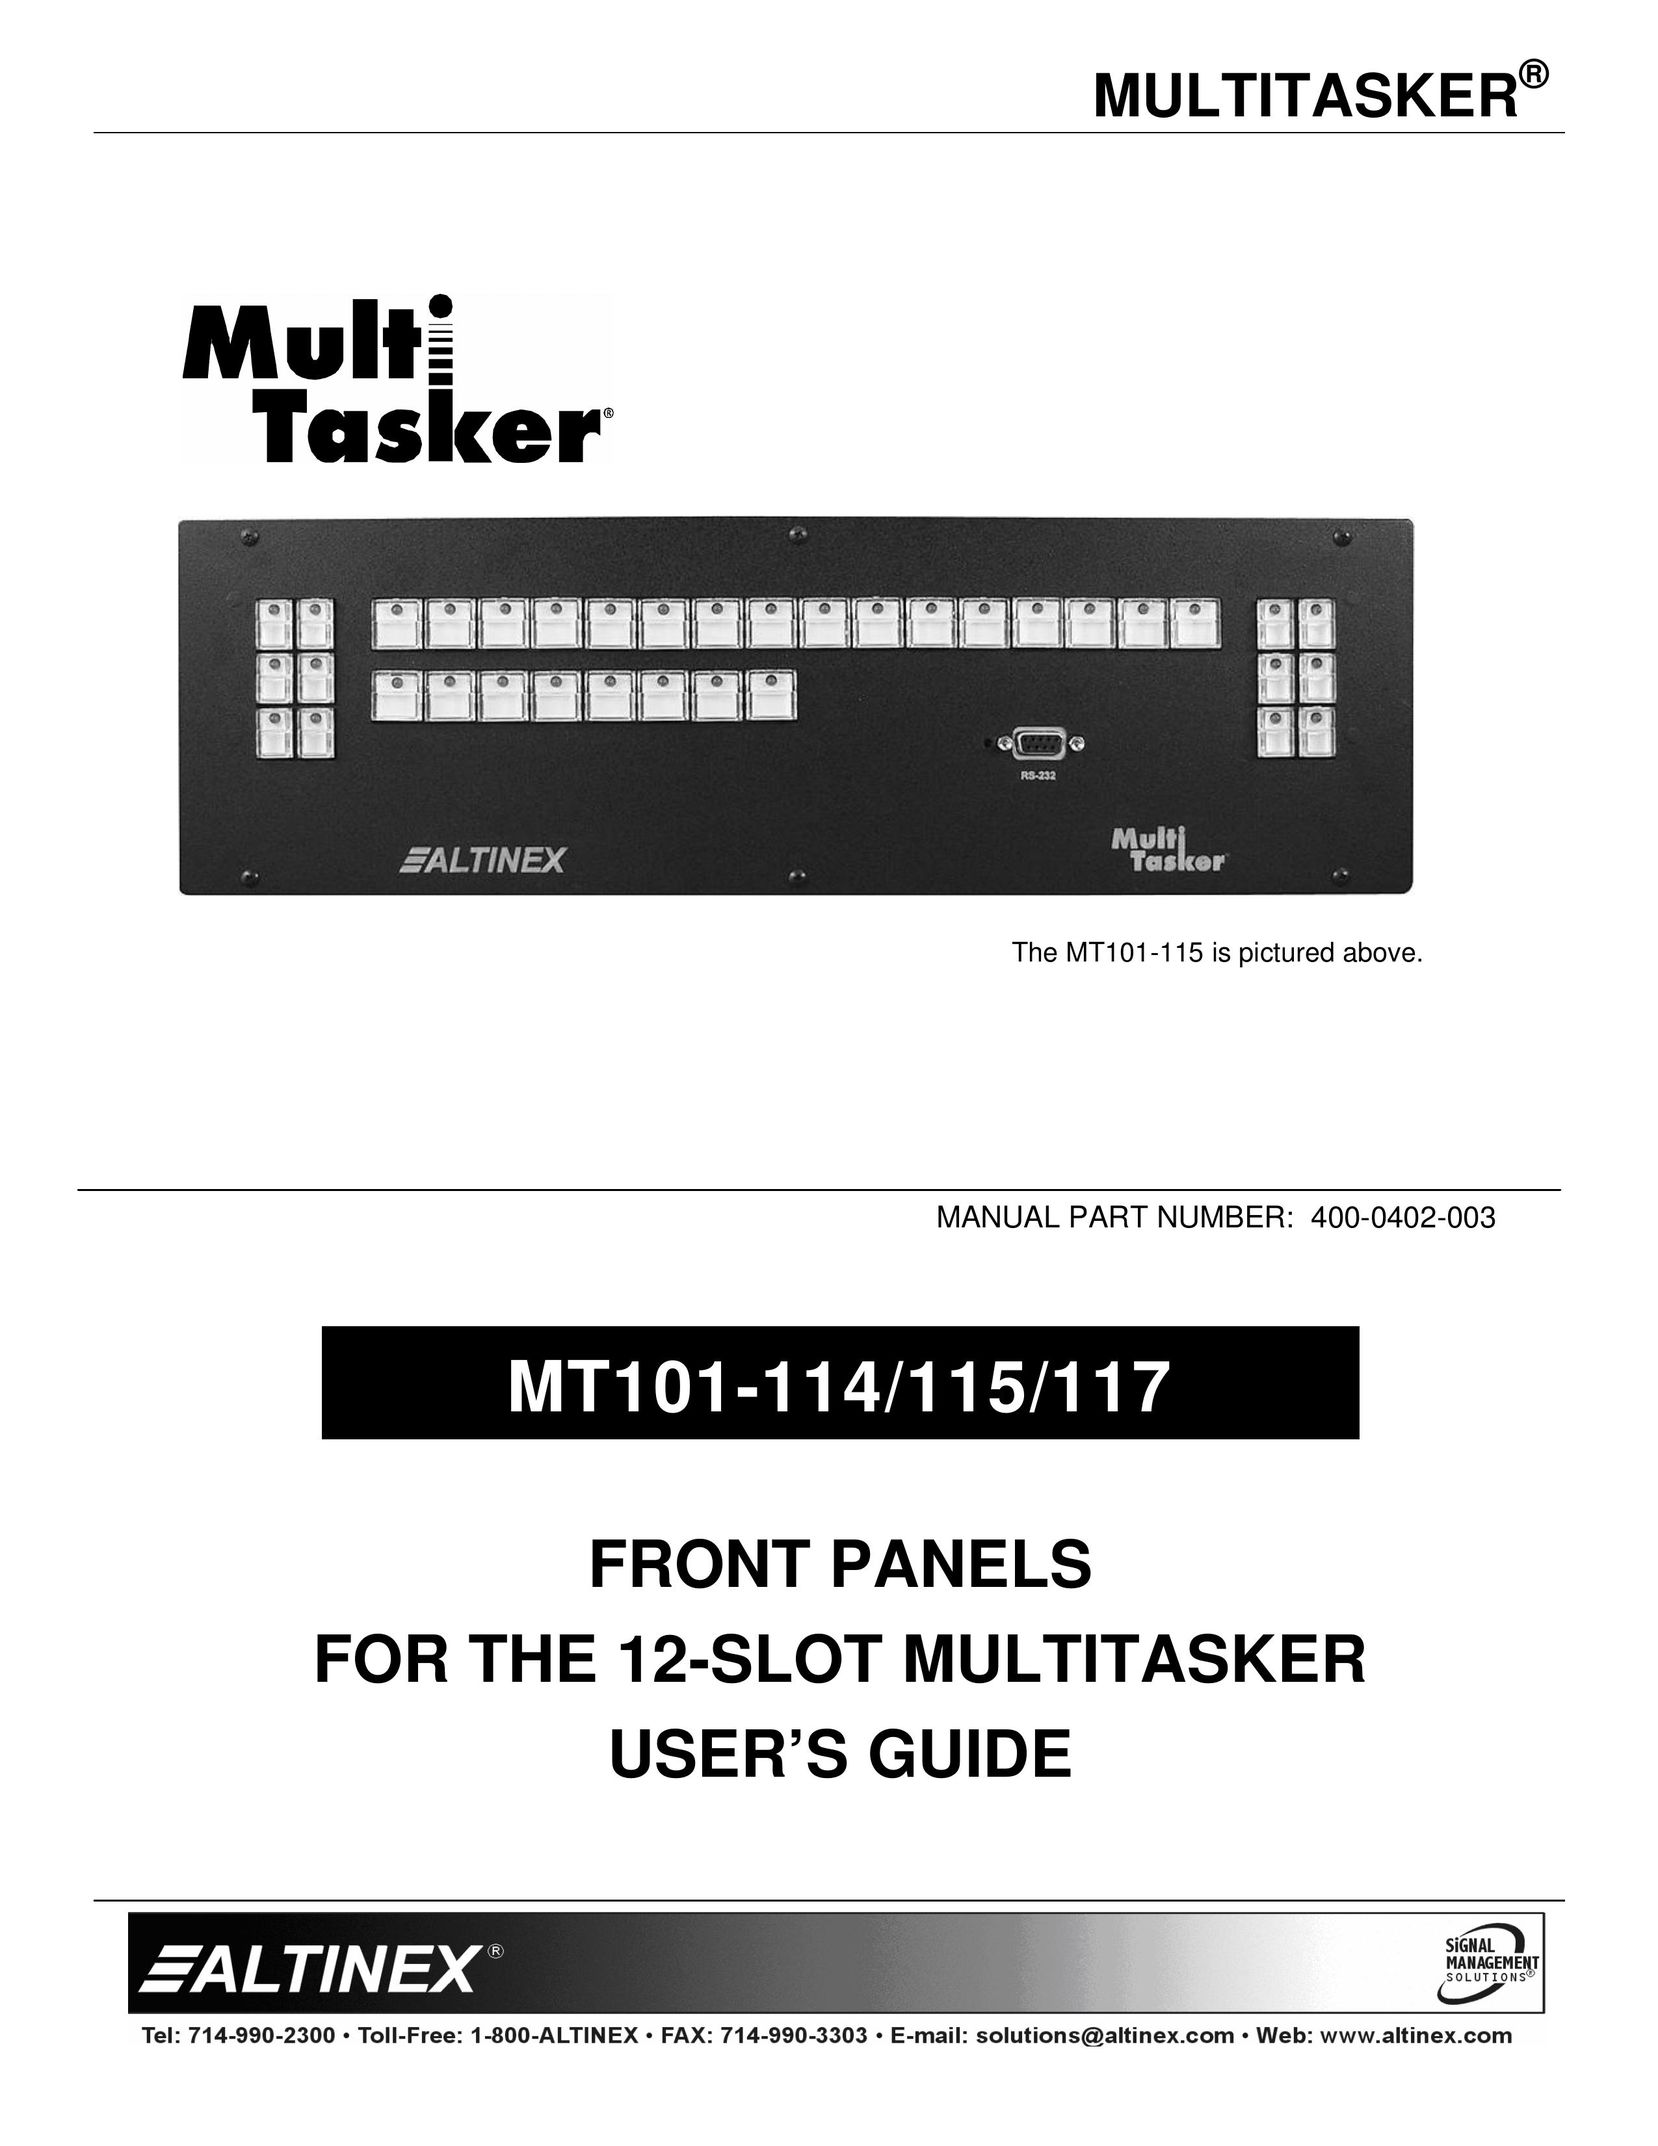 Altinex MT101-117 Network Card User Manual